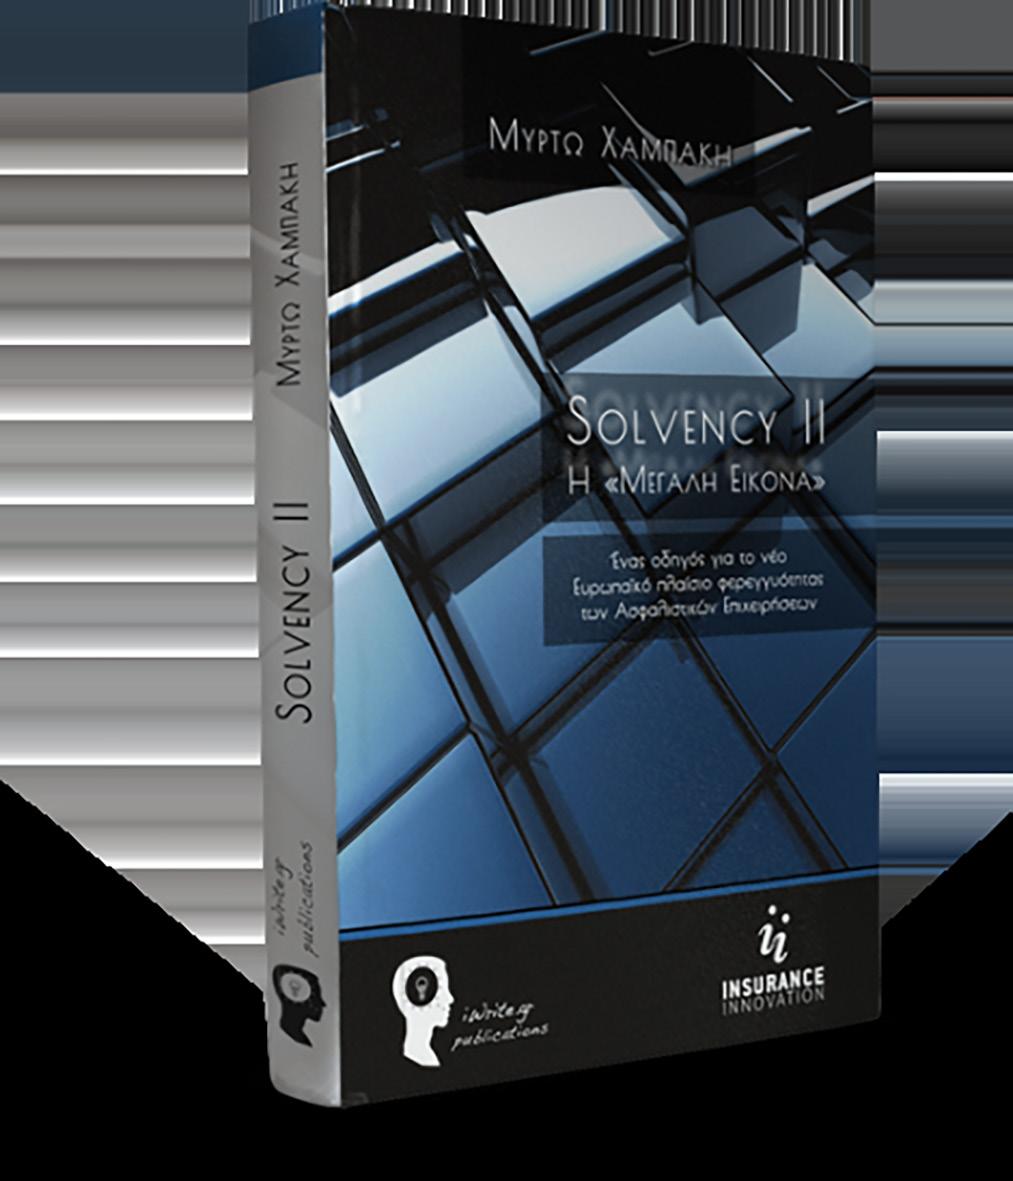 Solvency II - Η μεγάλη εικόνα Το βιβλίο αποσκοπεί στο να δώσει μία ολοκληρωμένη εικόνα για το νέο πλαίσιο Solvency II που ισχύει από 1/1/2016 για το σύνολο της Ευρωπαϊκής ασφαλιστικής αγοράς.